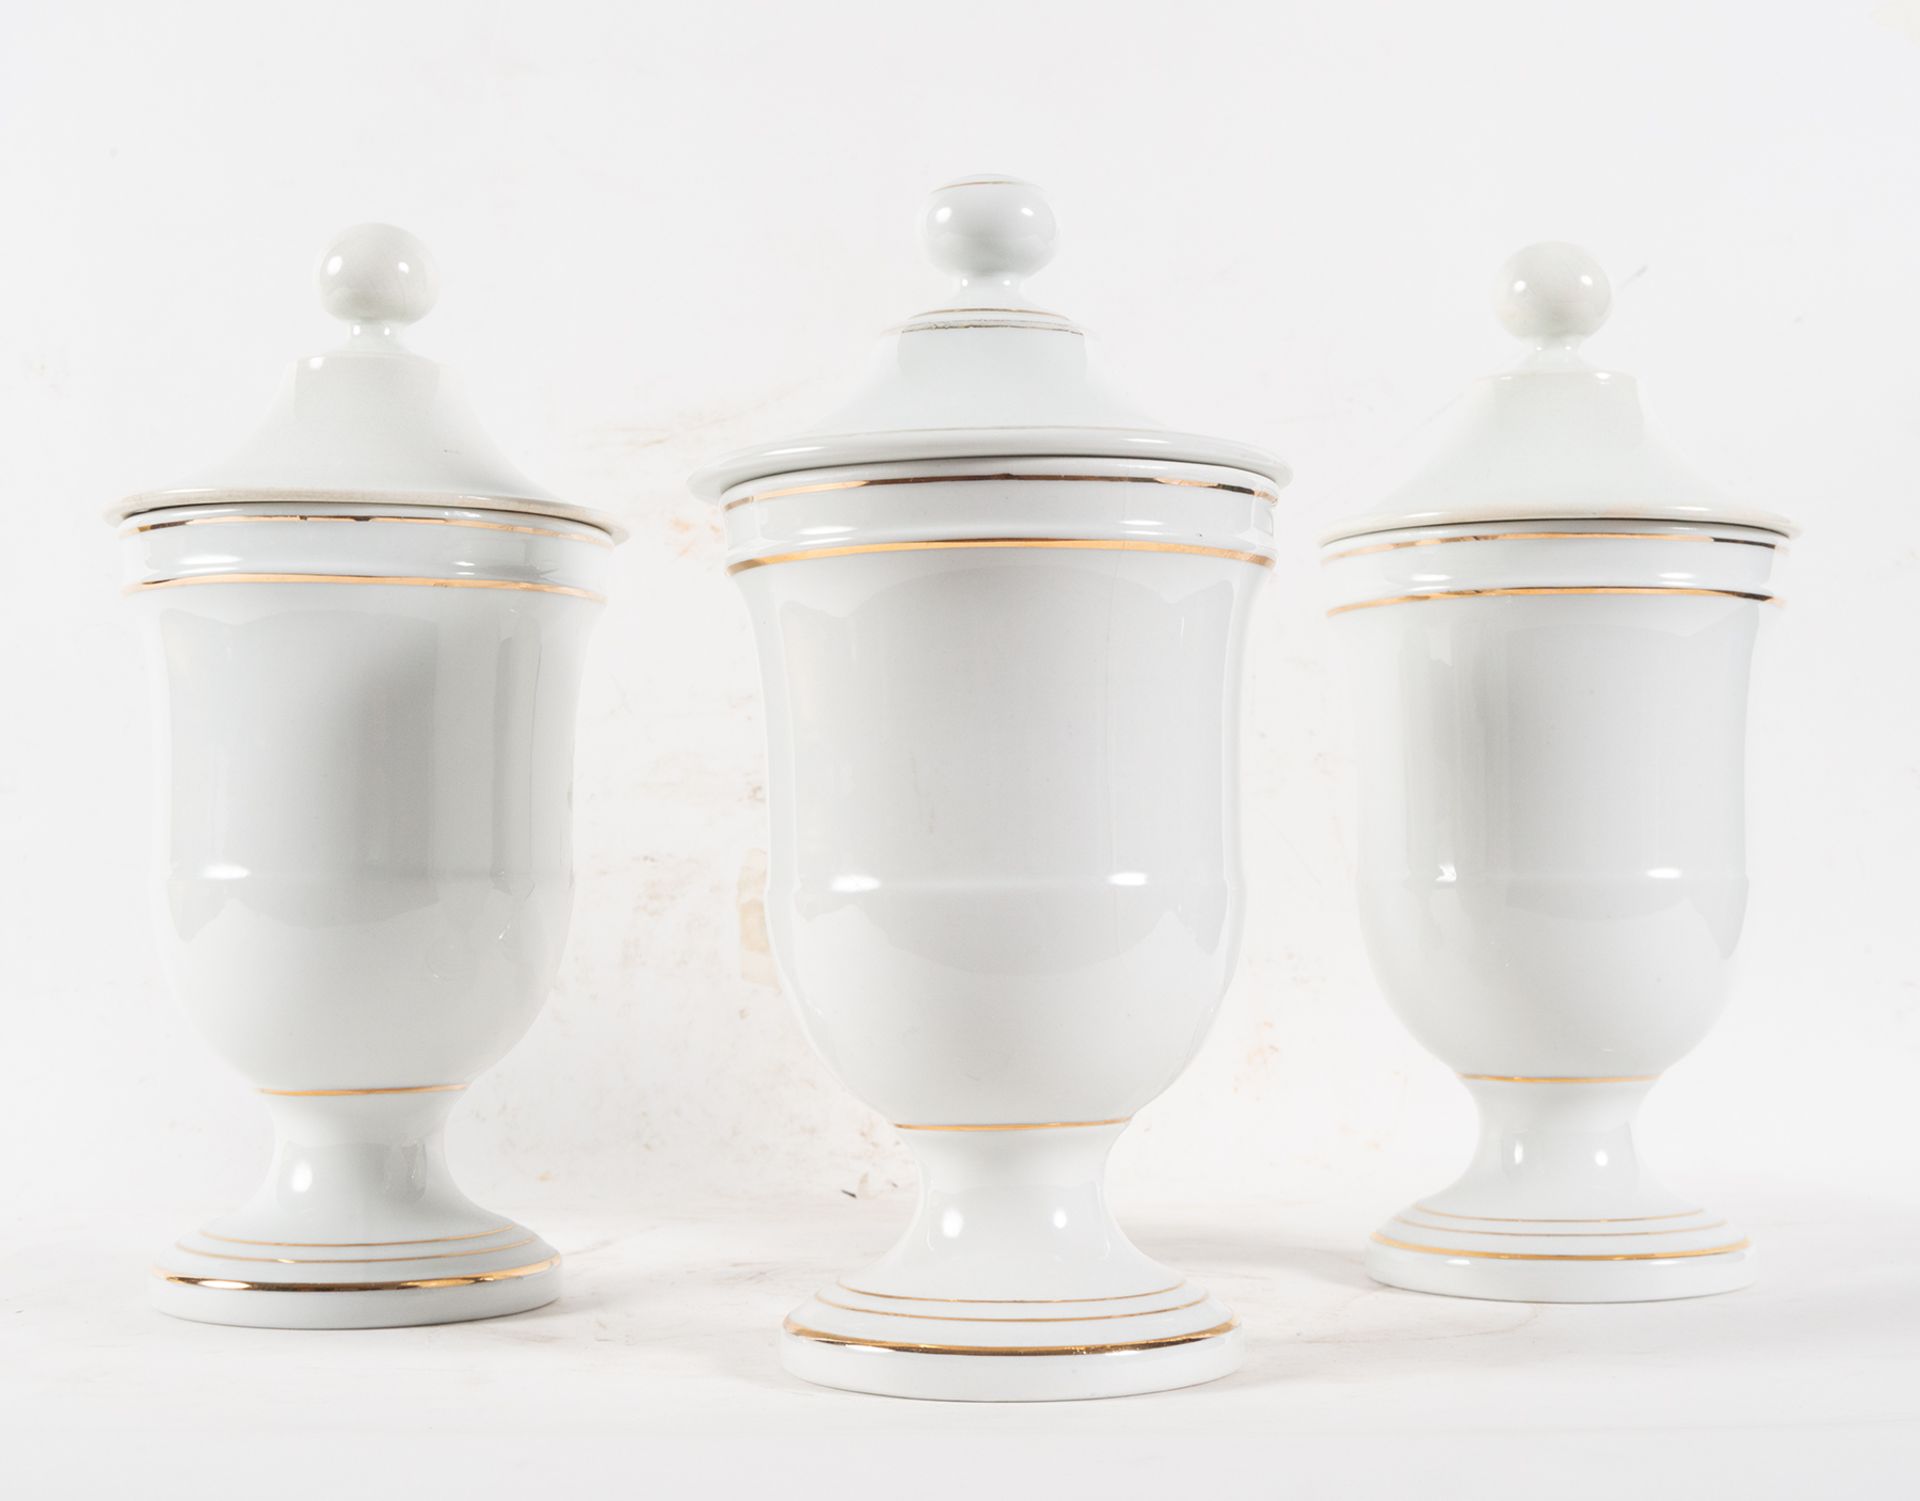 Set of three glazed ceramic pharmacy jars, 19th century - Image 2 of 2